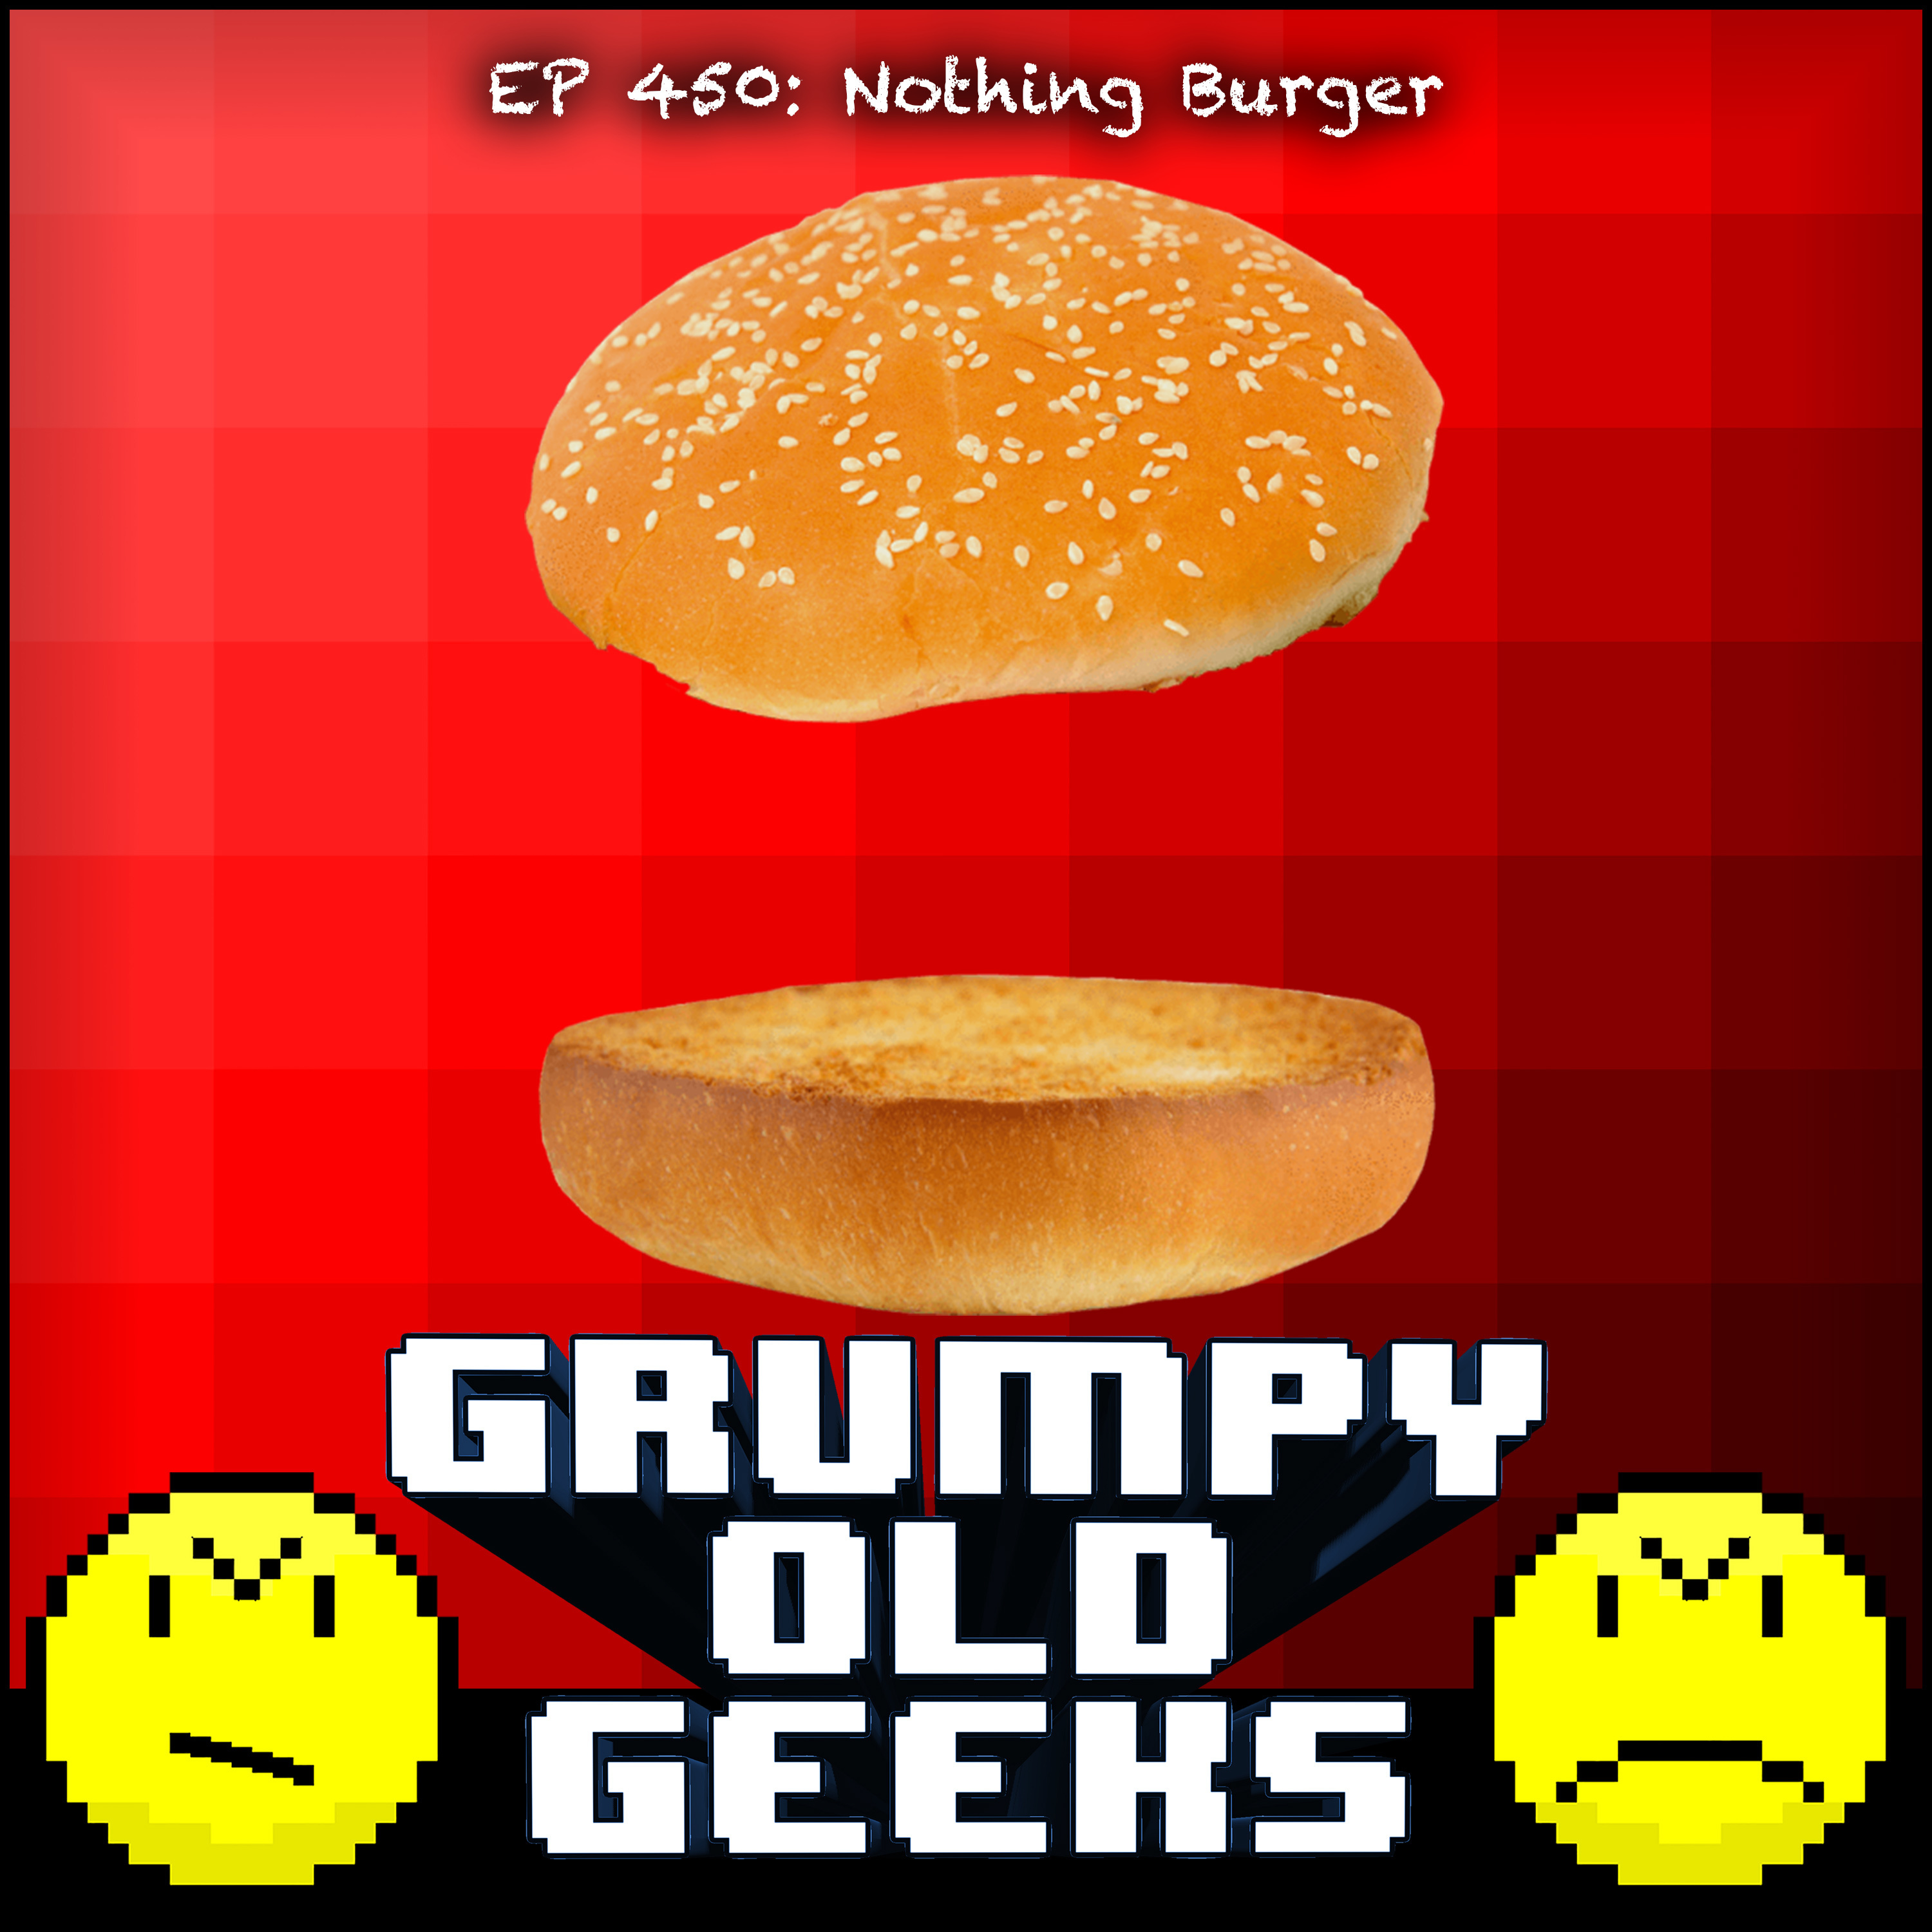 450: Nothing Burger Image